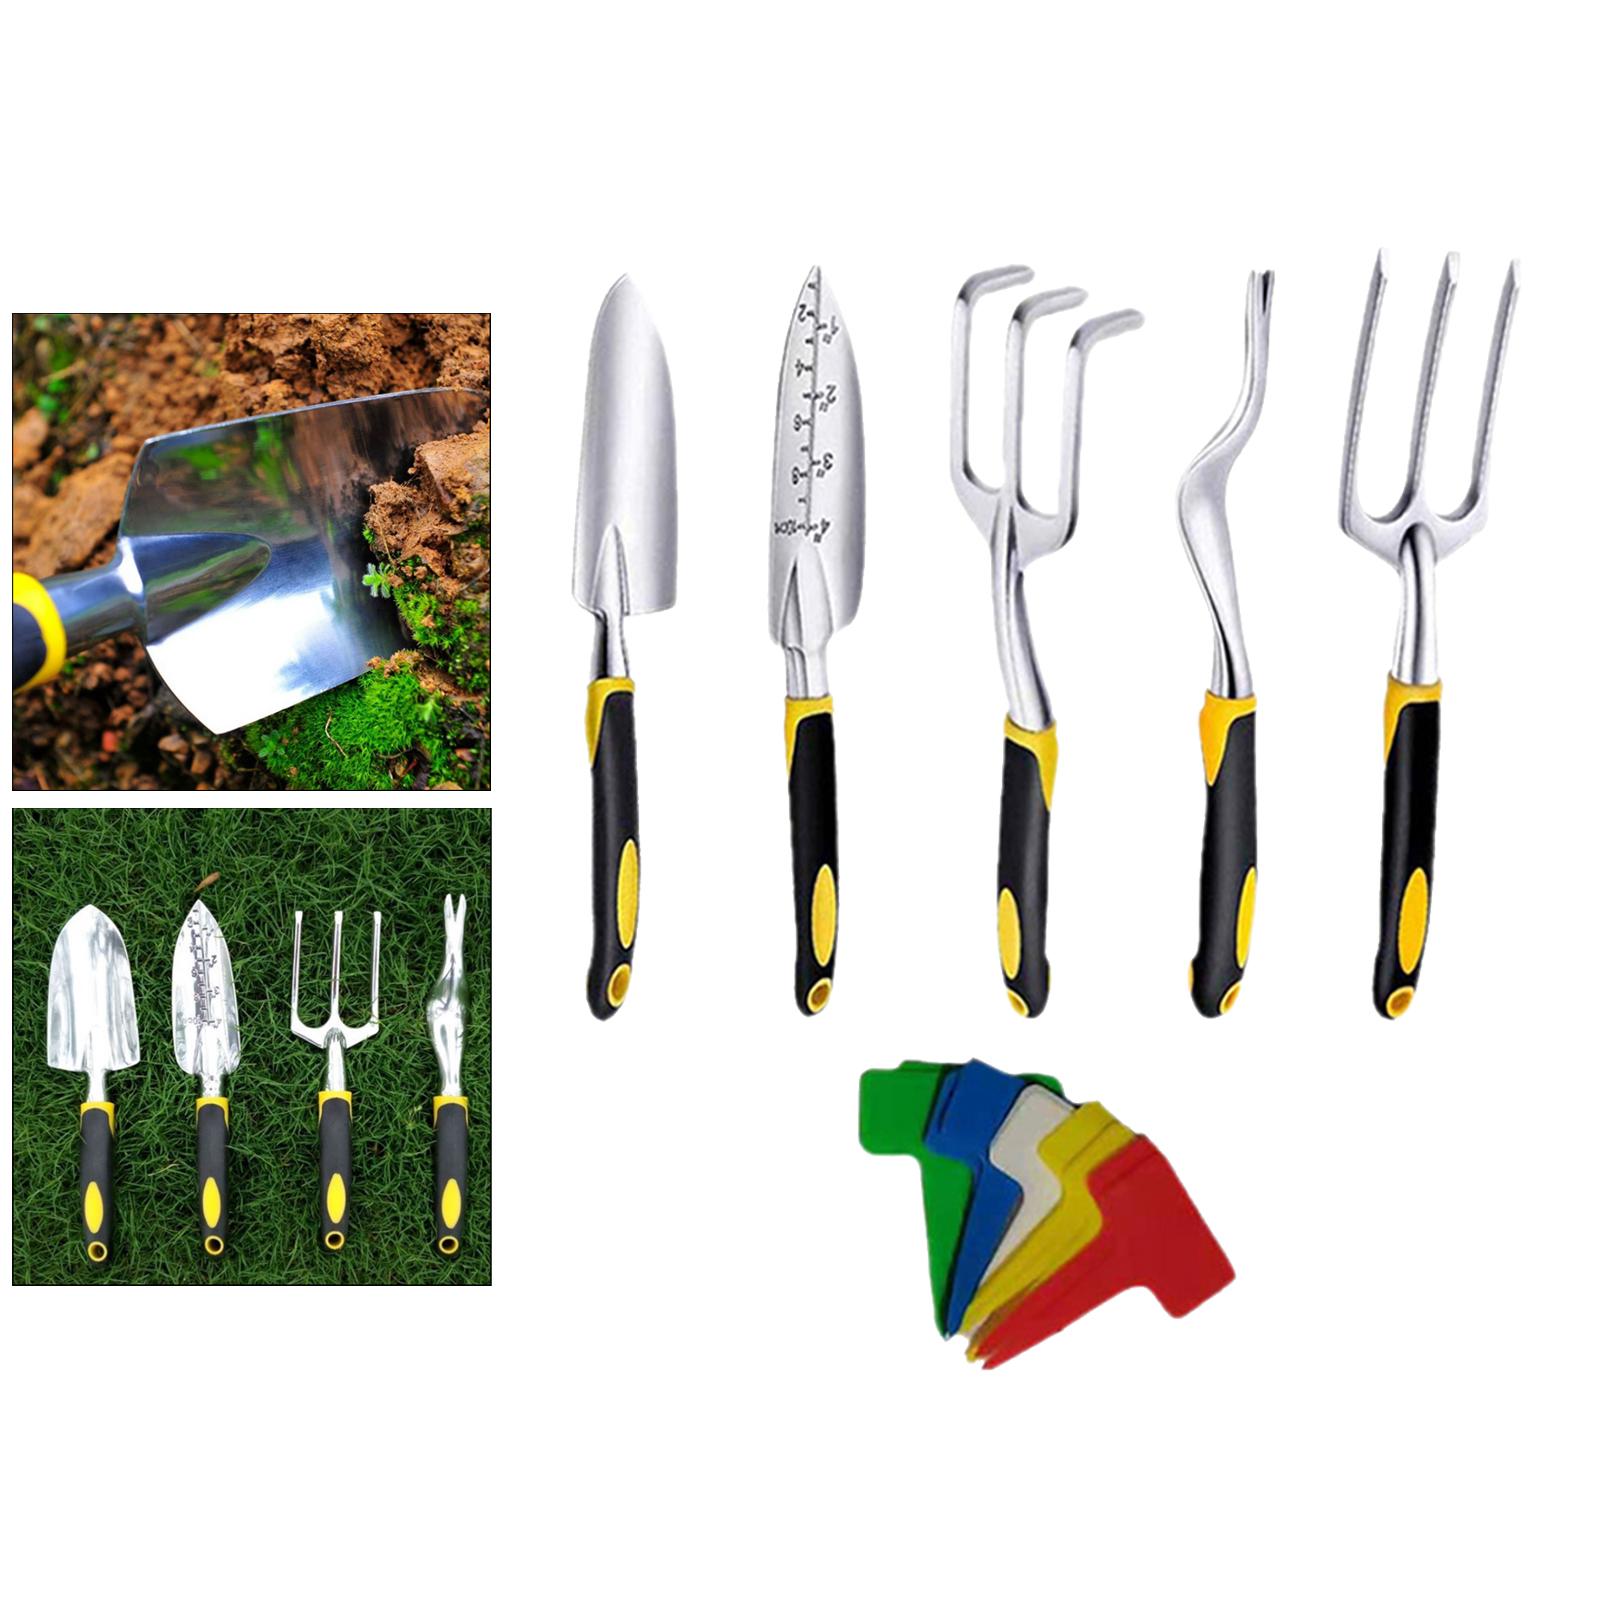 5pcs Heavy Duty Gardening Supplies Gifts Trowel Cultivator Weeding Fork Kit